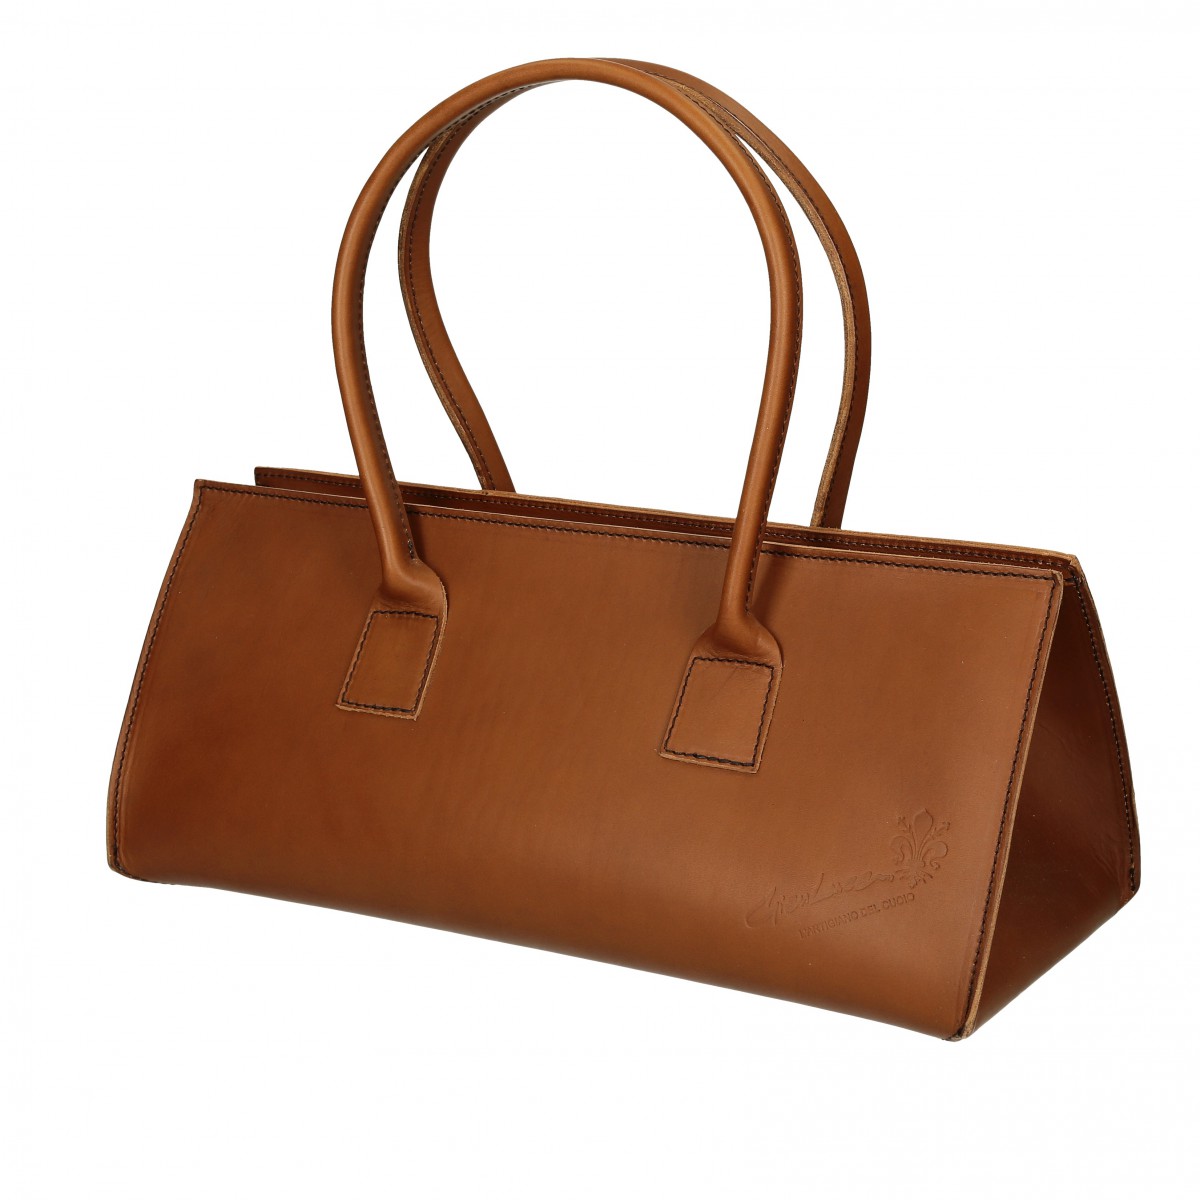 Brown leather handbag for women Handmade in Italy | Gianluca - The